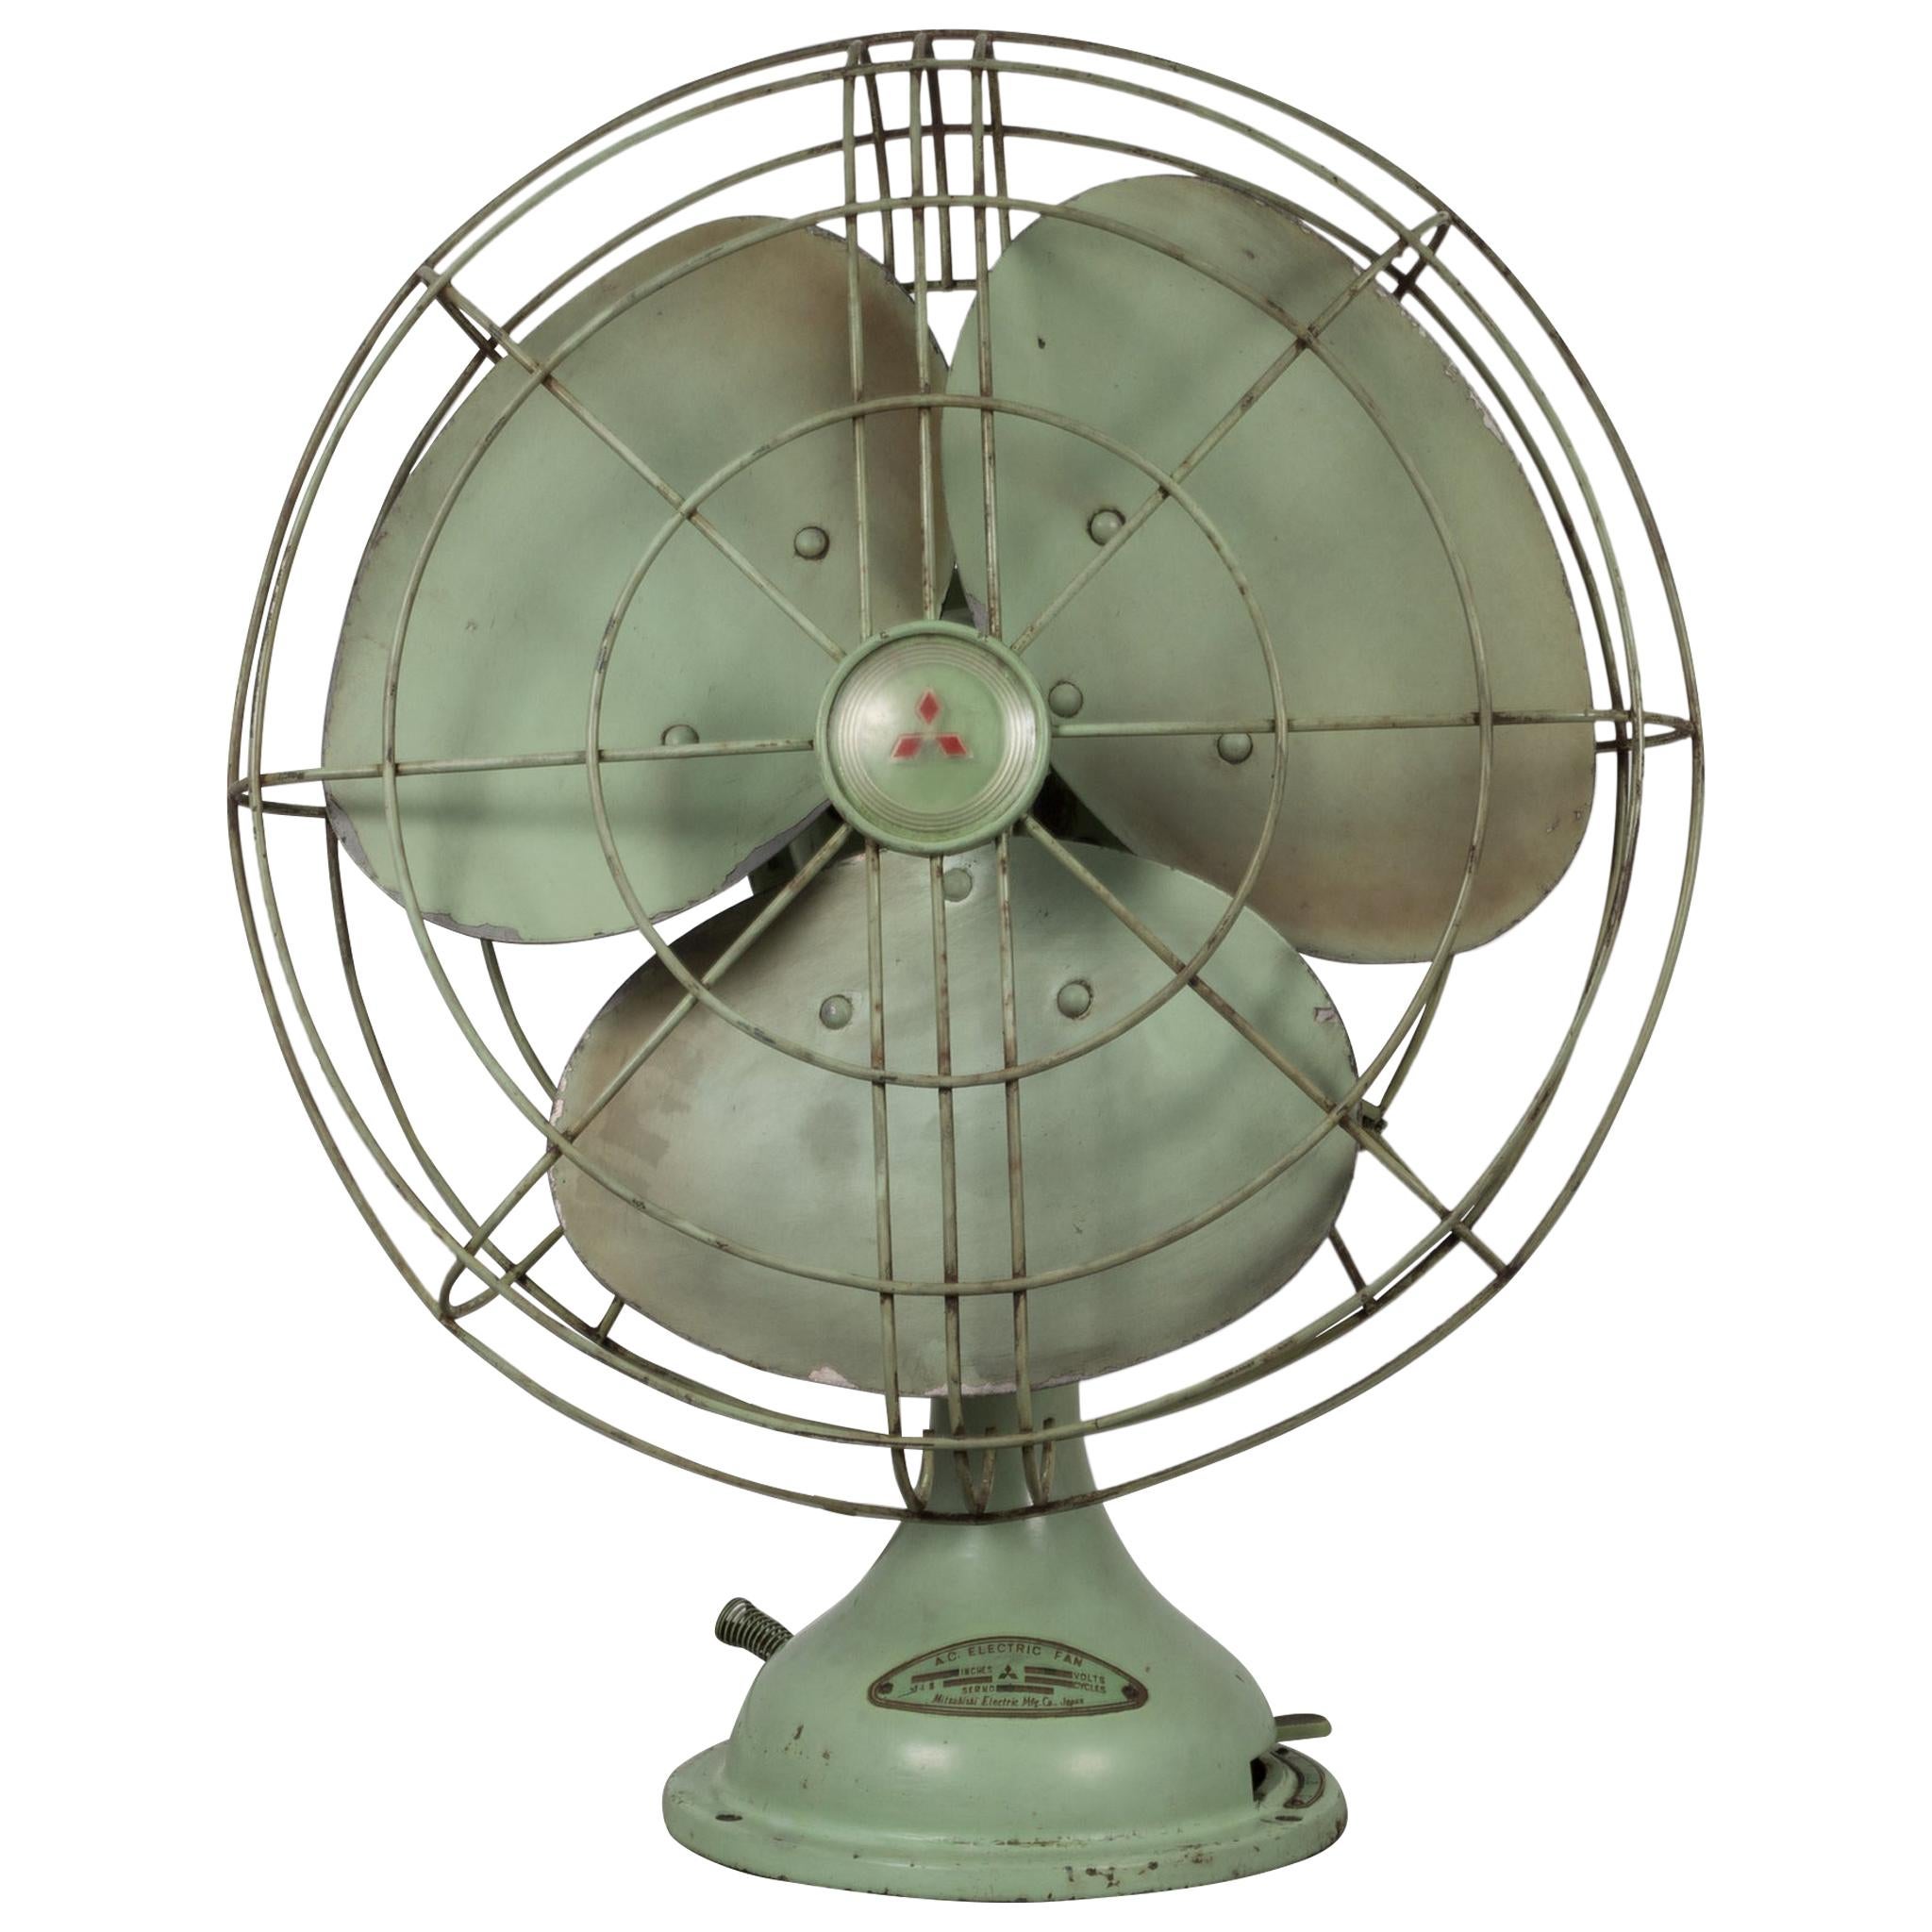 Vintage A.C. Electric Oscillating Fan, circa 1950